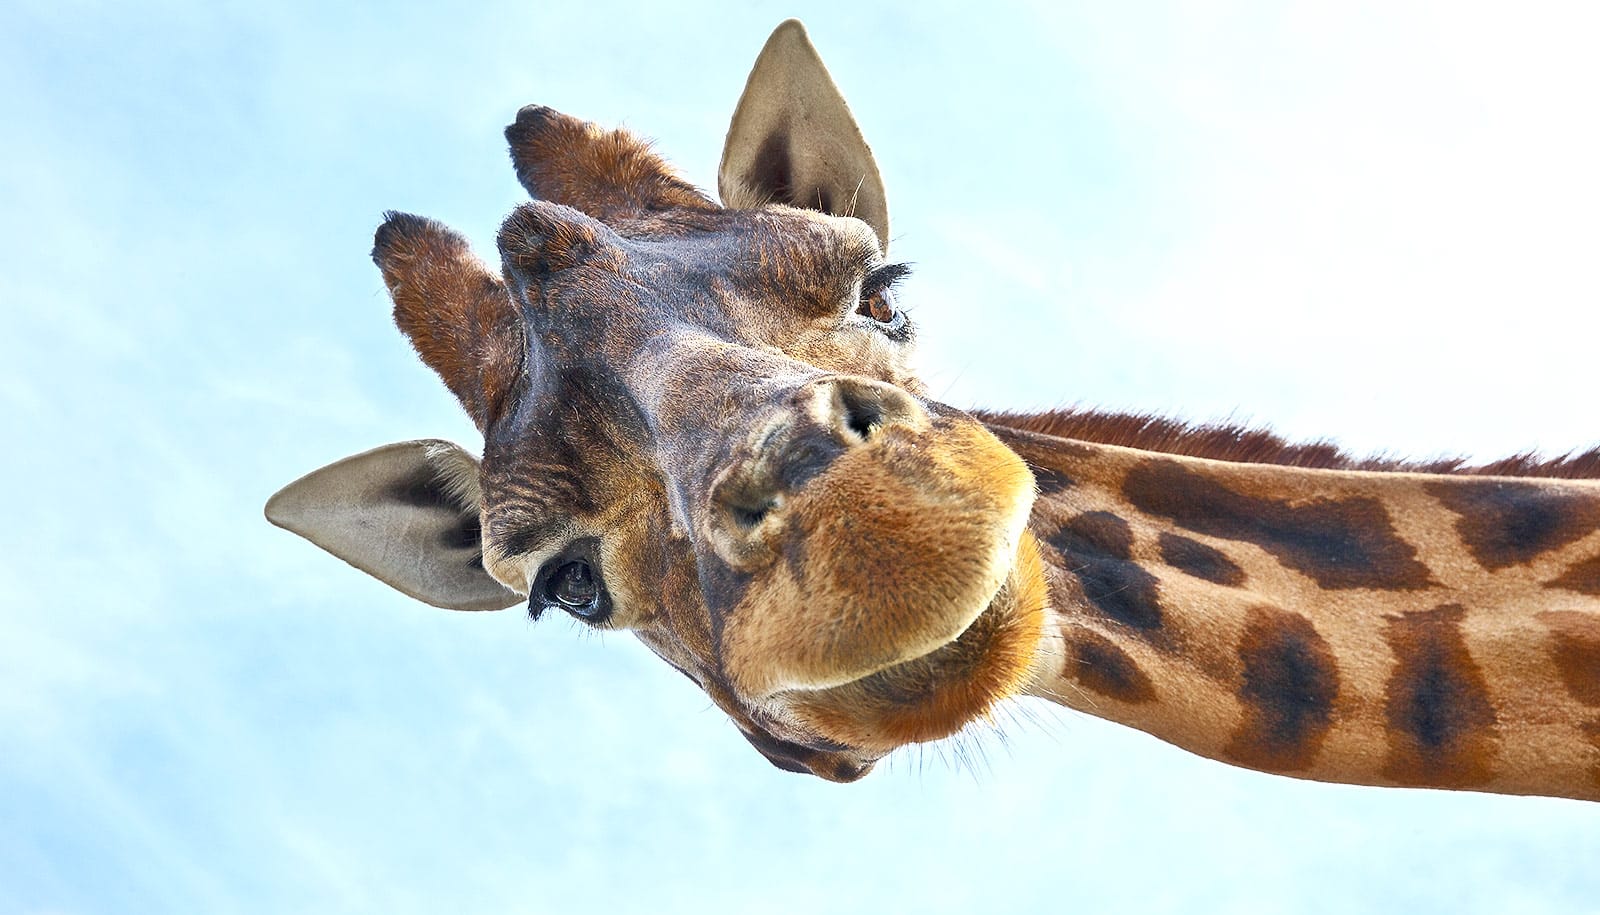 A giraffe looks at the camera.